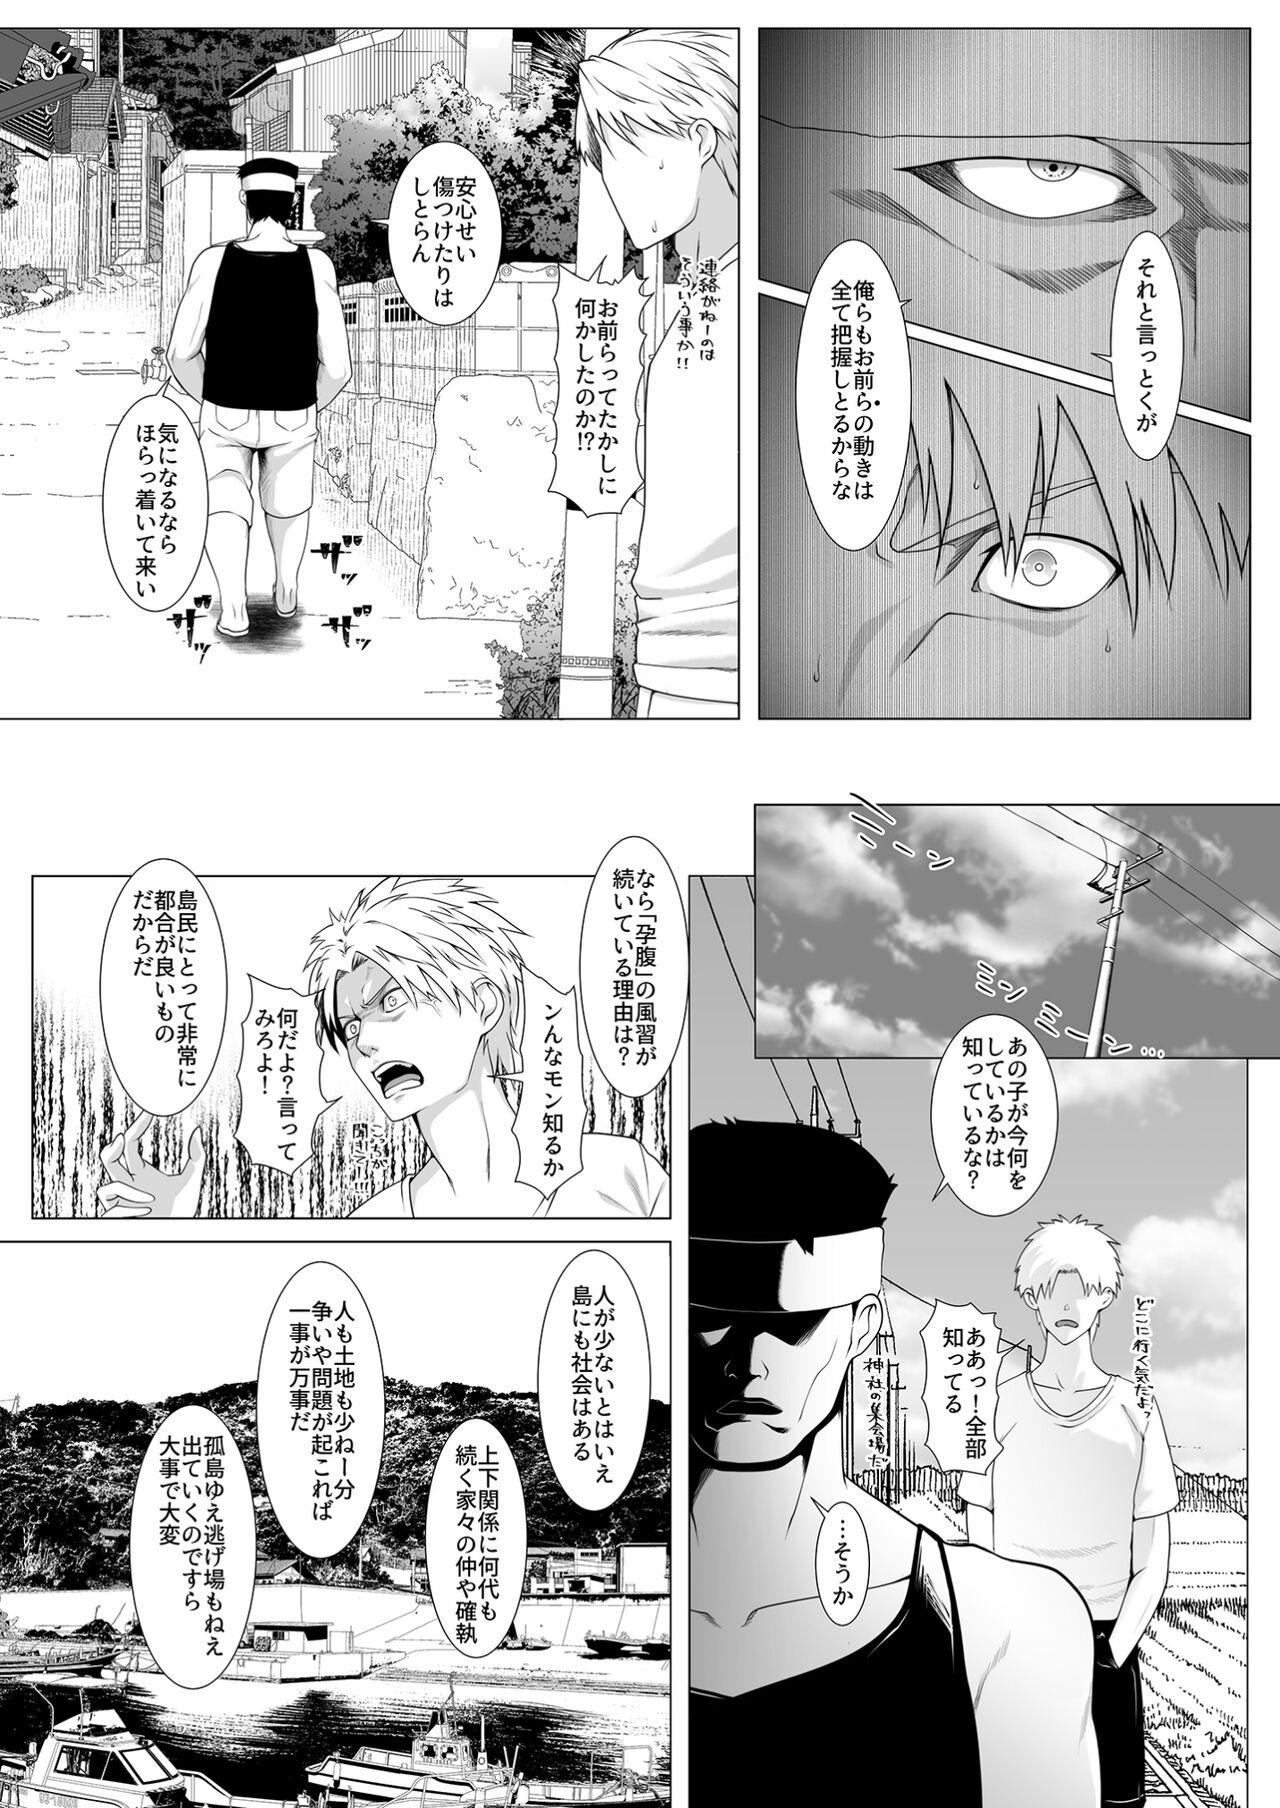 Tall Haramase no Shima 4 - Original Bro - Page 5